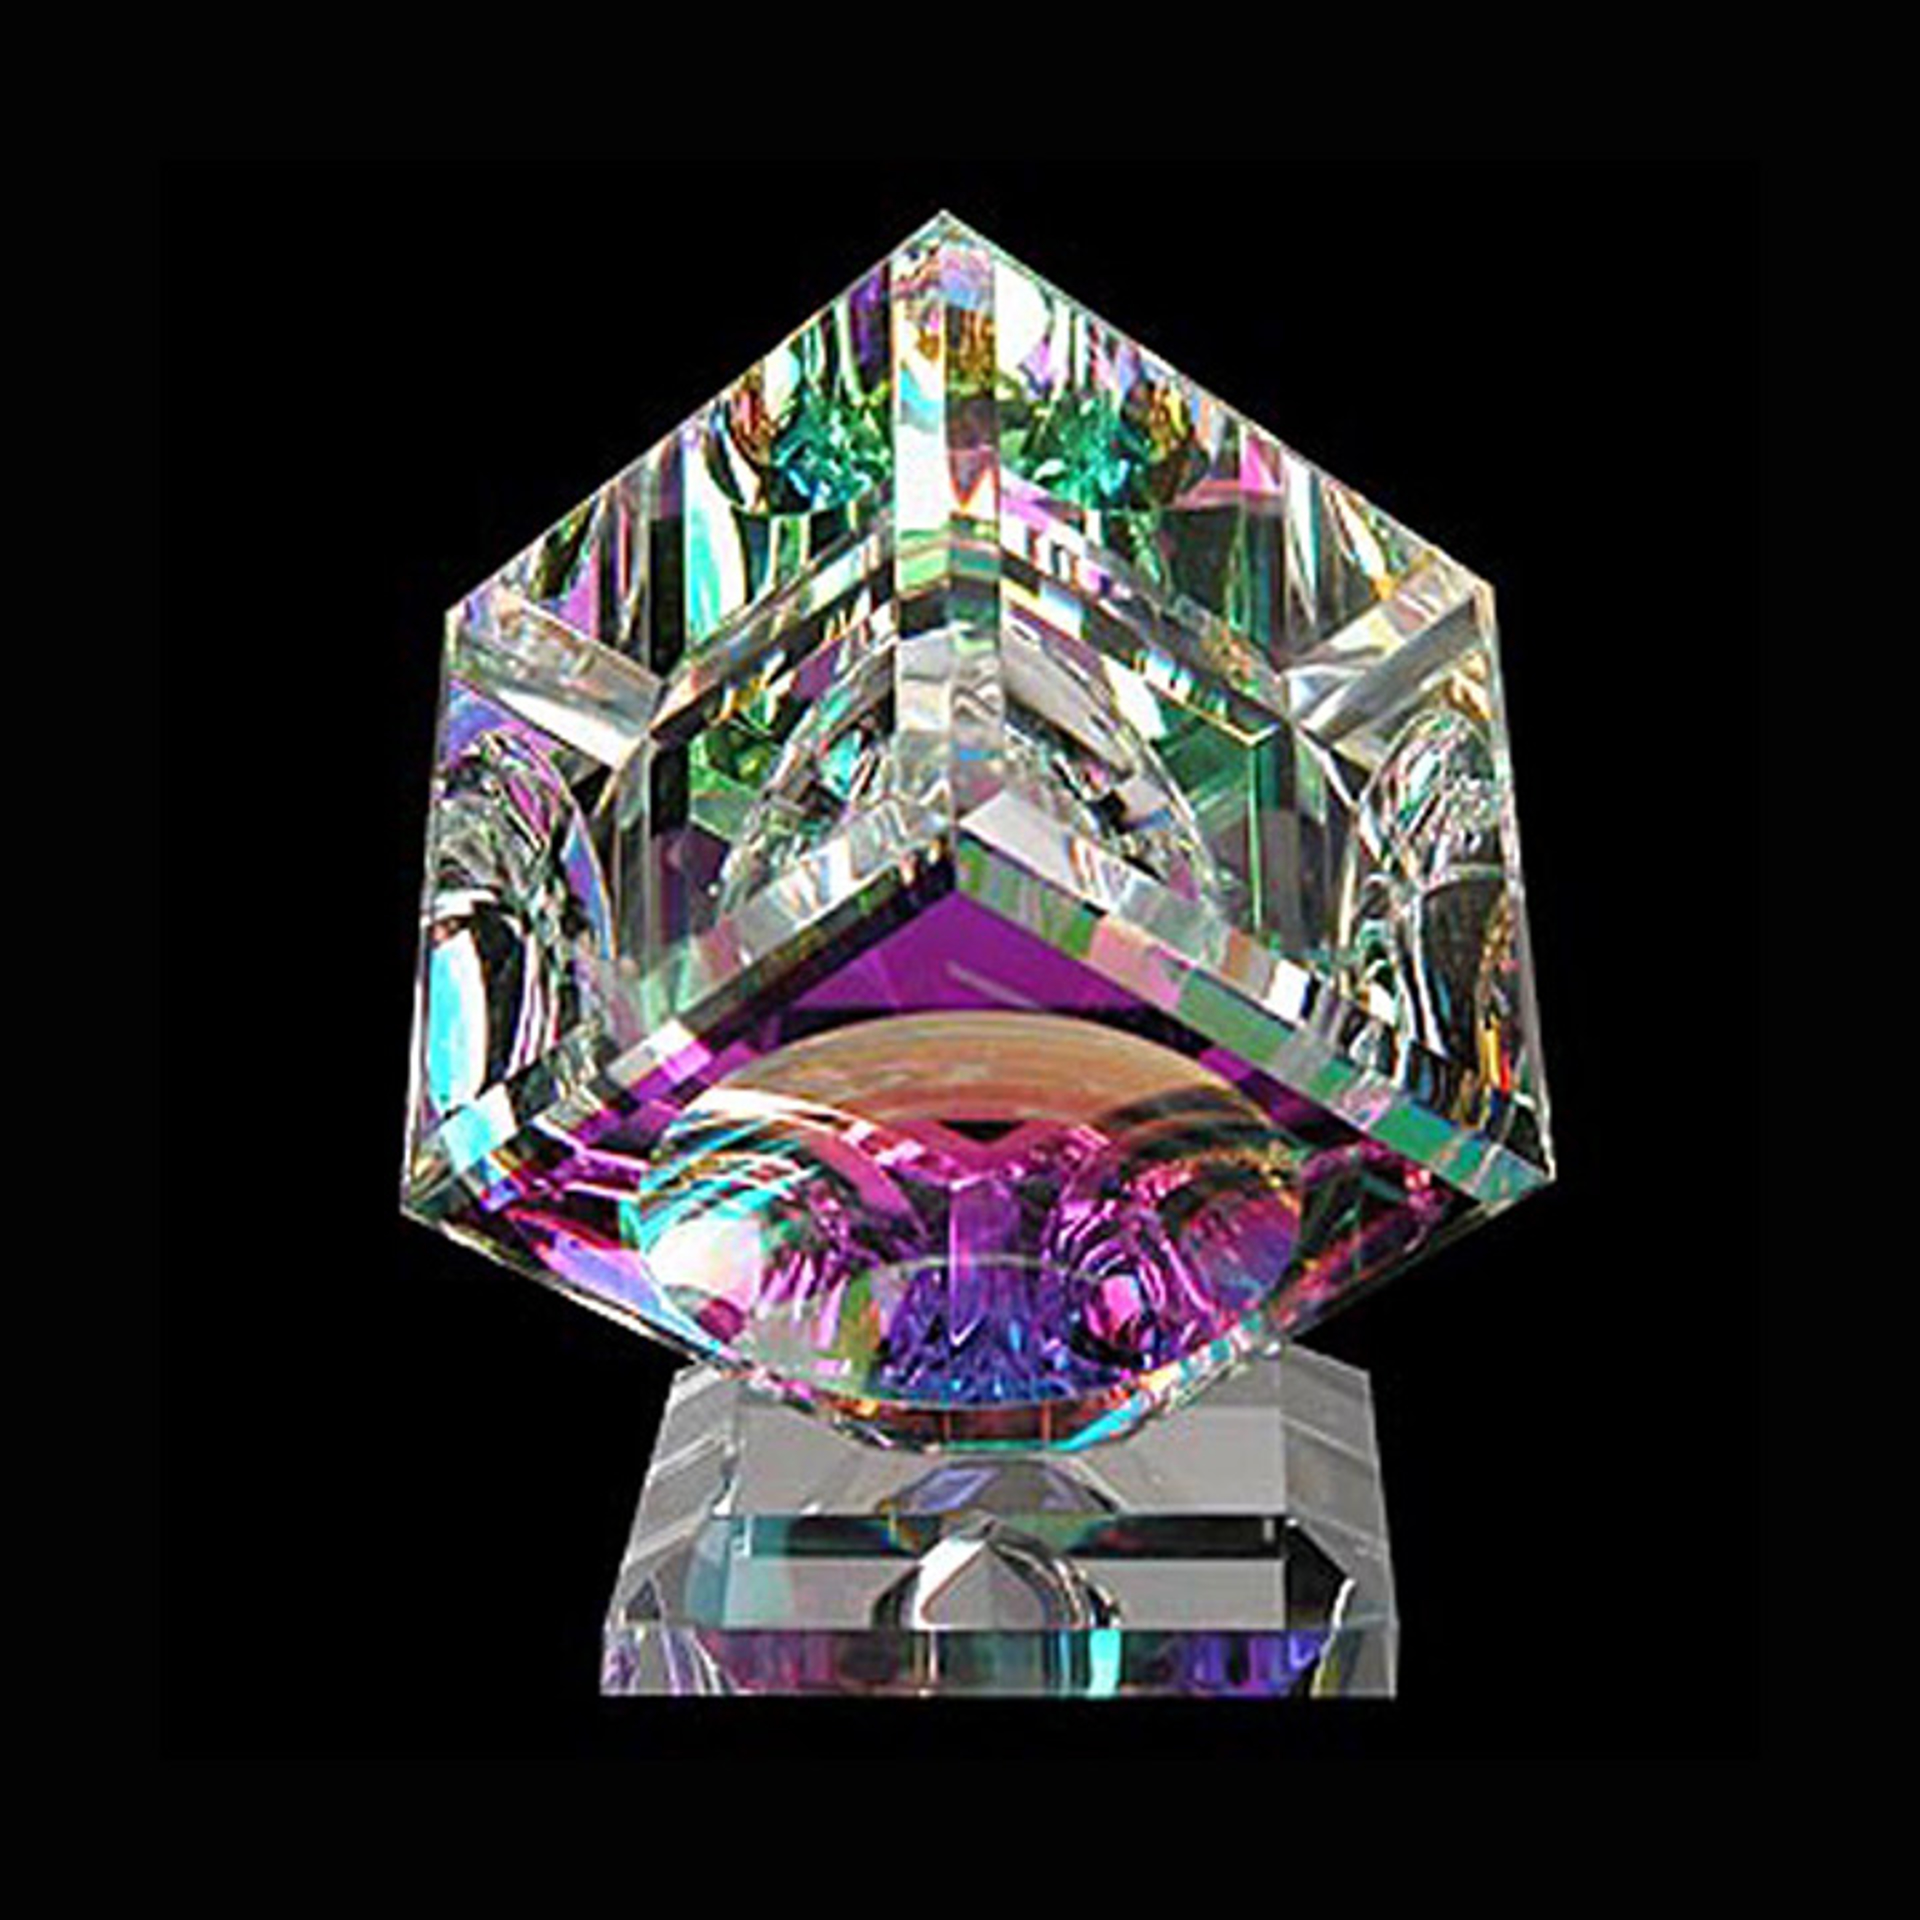 Crystal Cube 145mm(5 3/4") "B" Bevel on Base by Harold Lustig